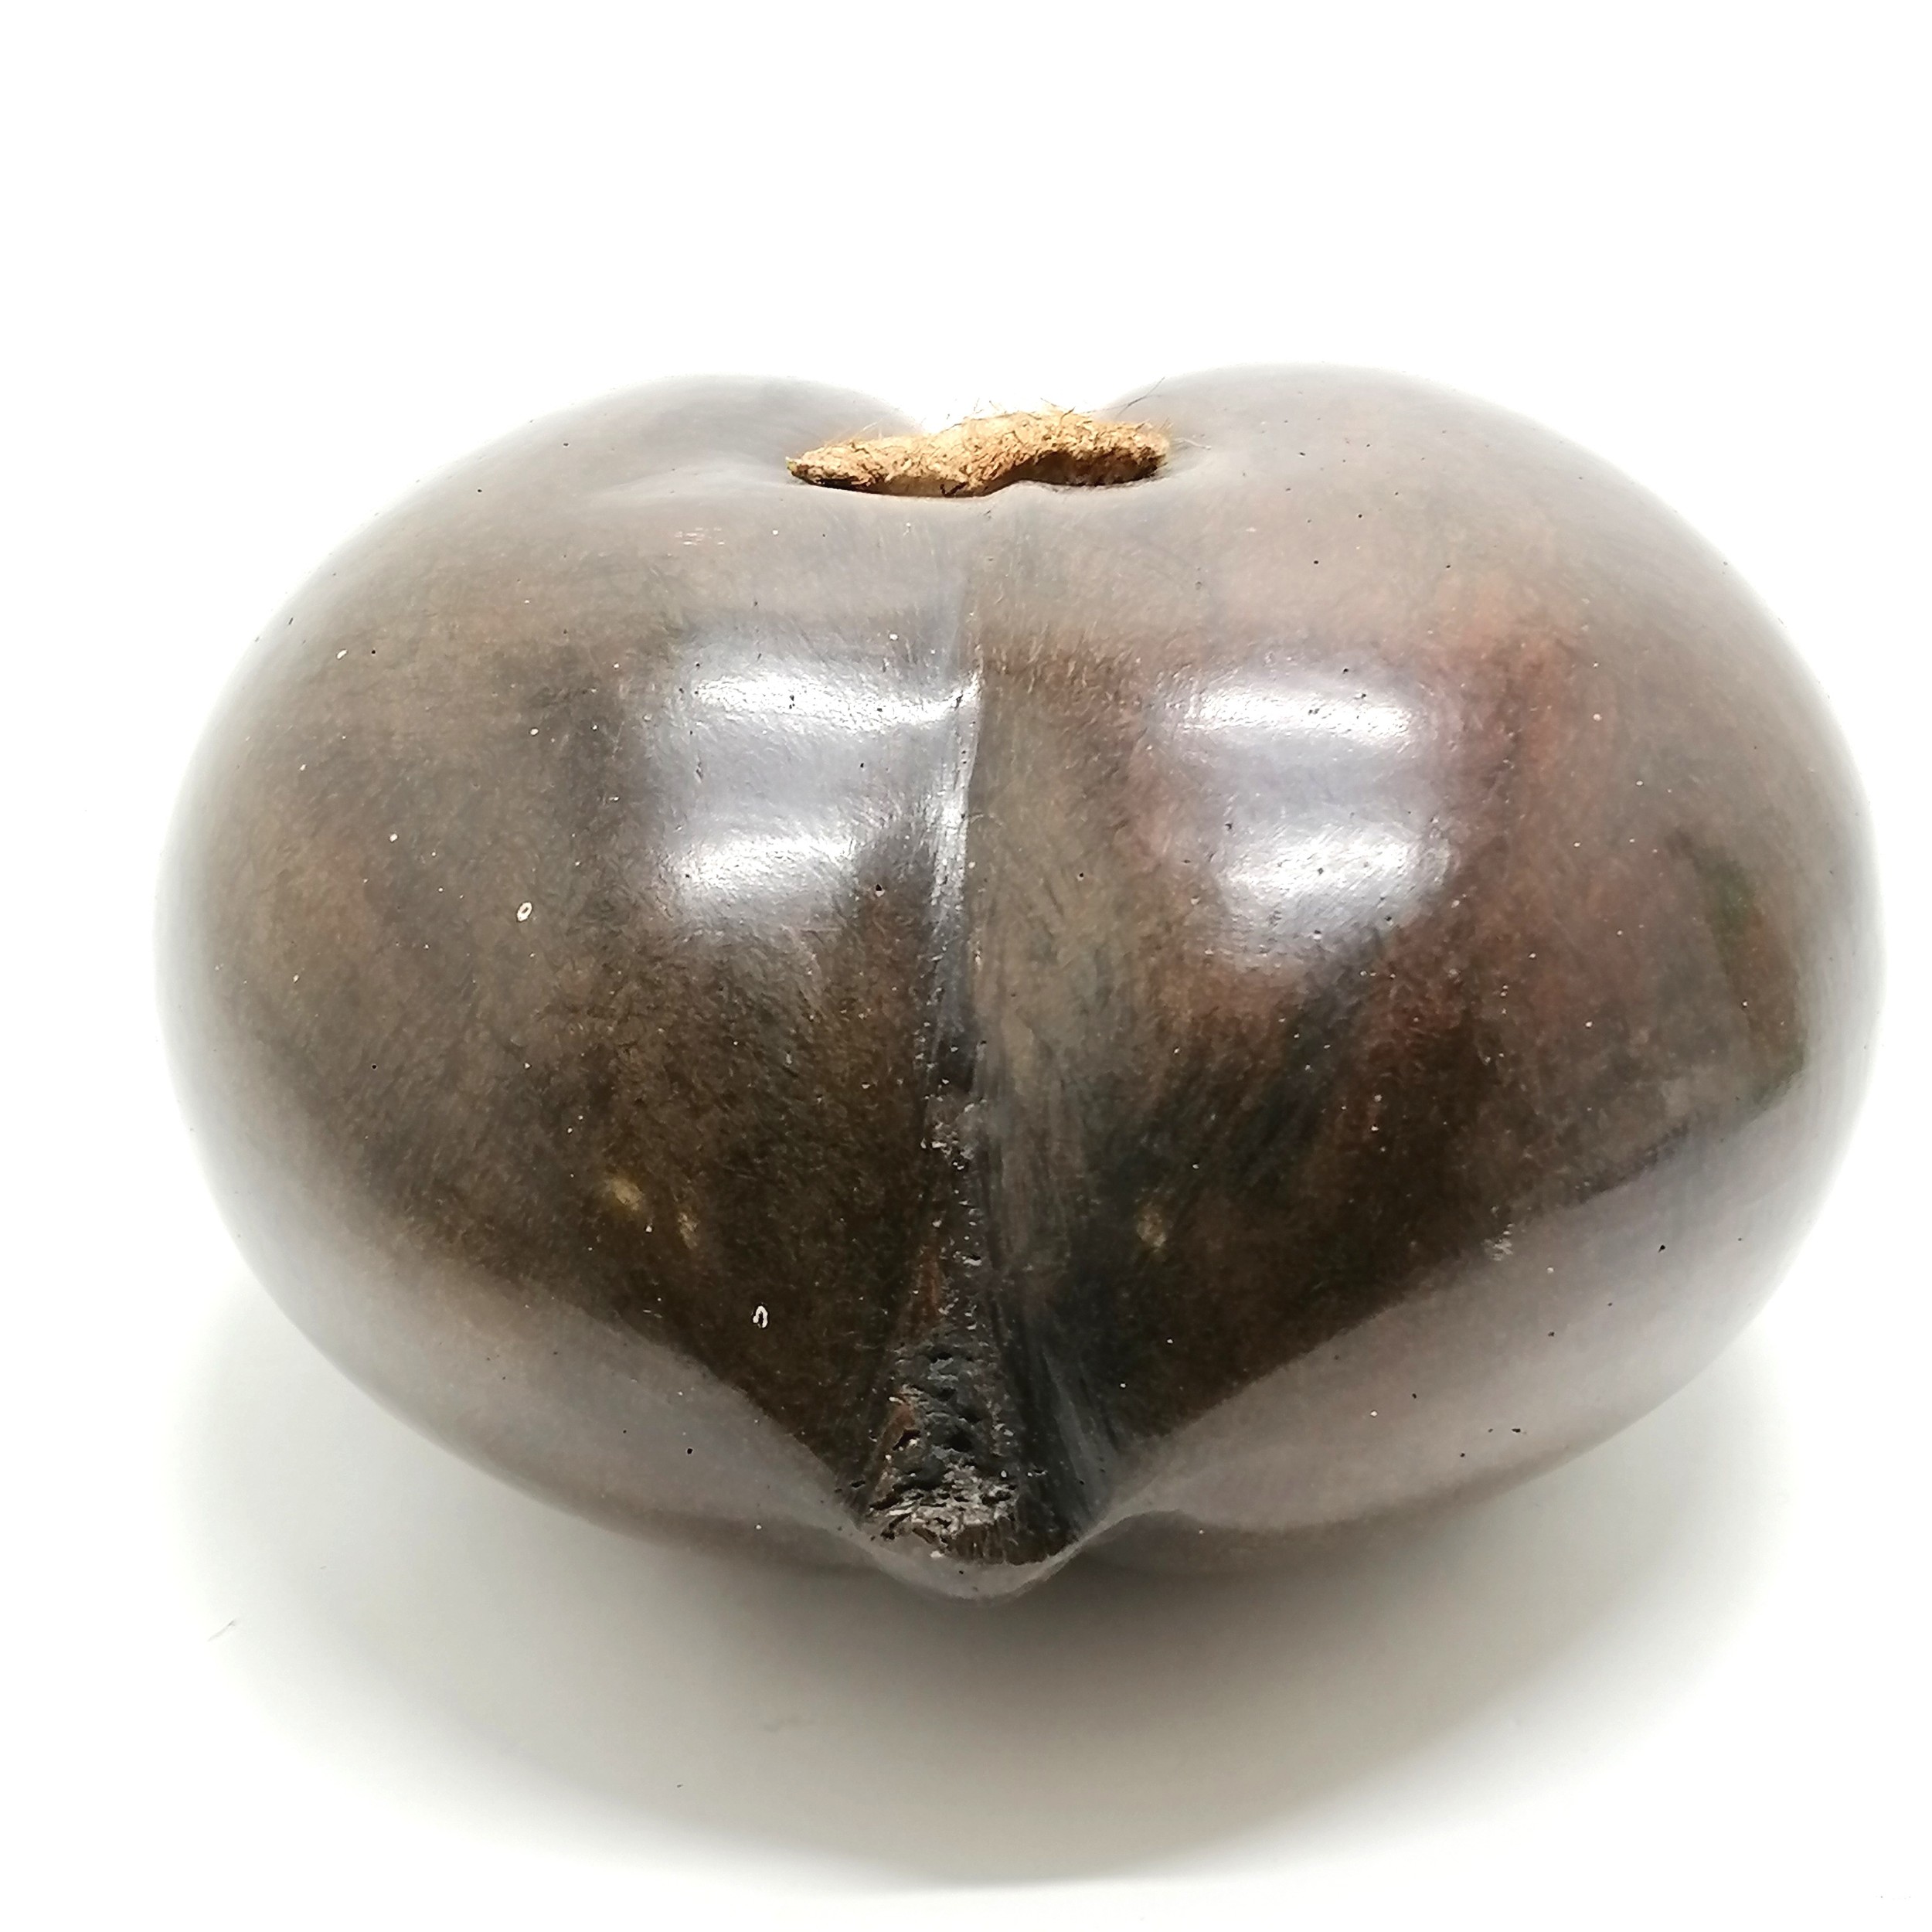 Coco de mer (Lodoicea) nut / seed - 25cm x 26cm & 1.1kg - Image 3 of 4